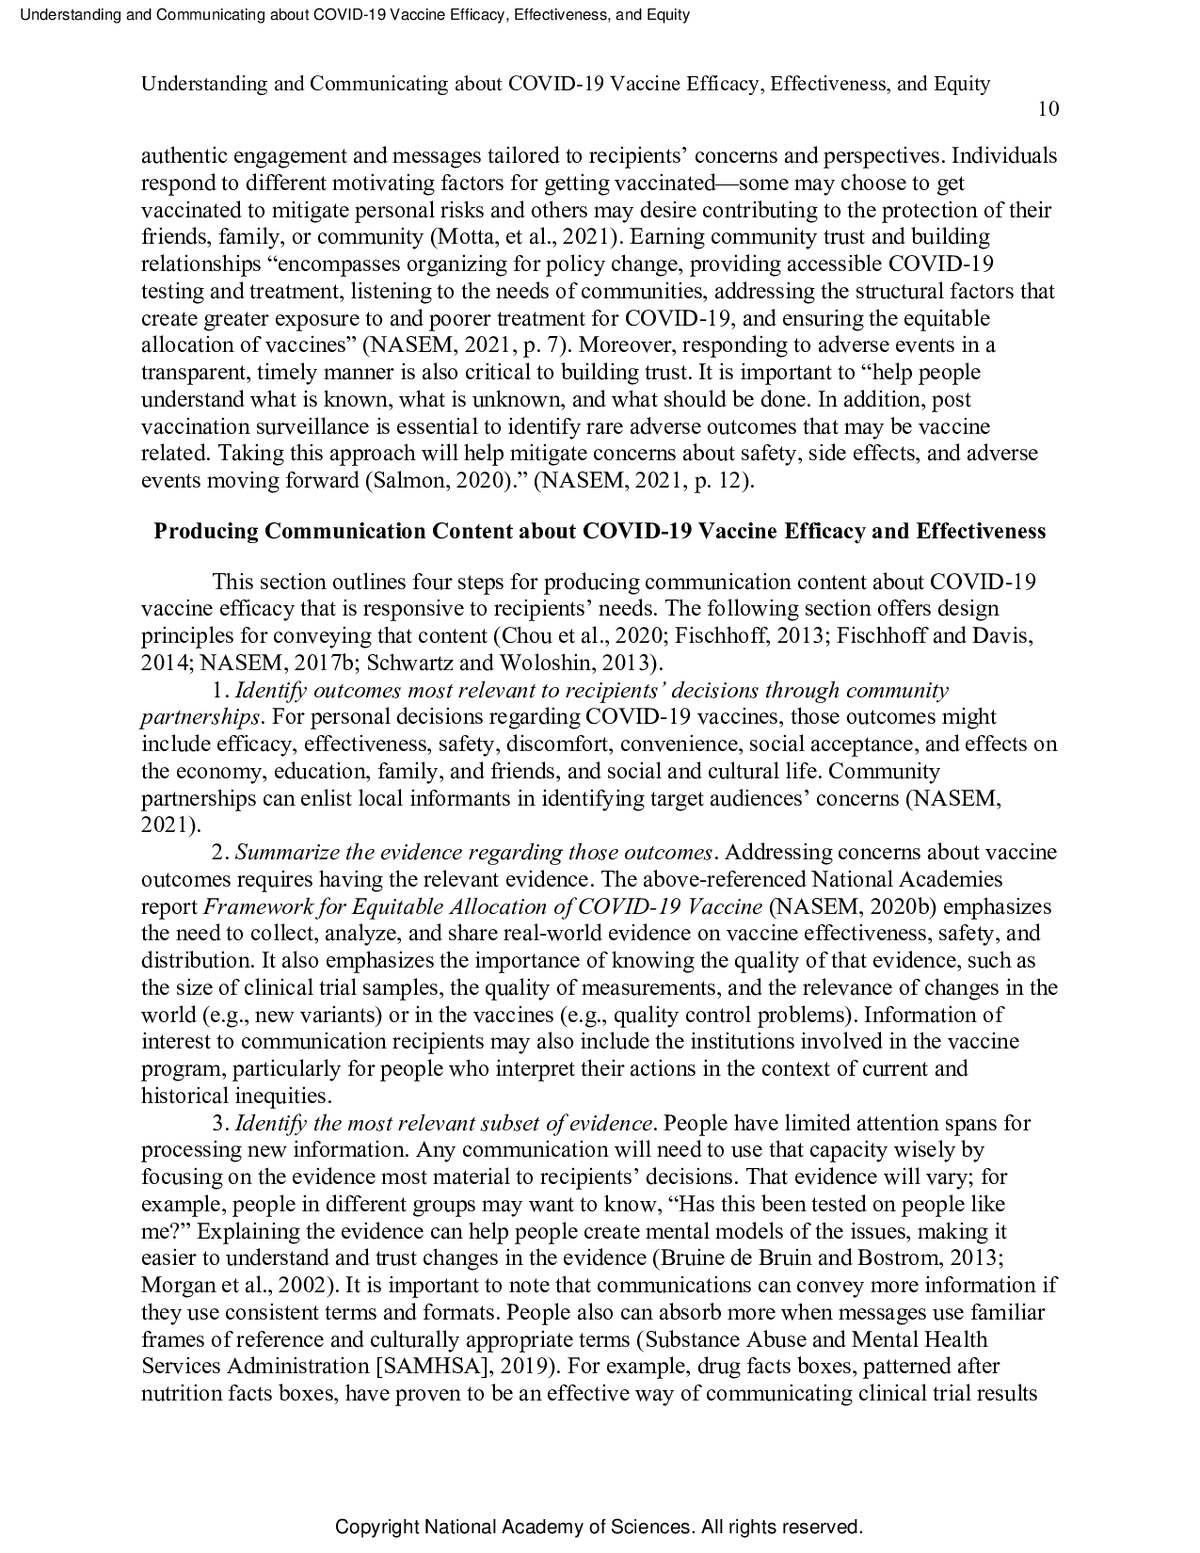 covid 19 vaccine research paper pdf